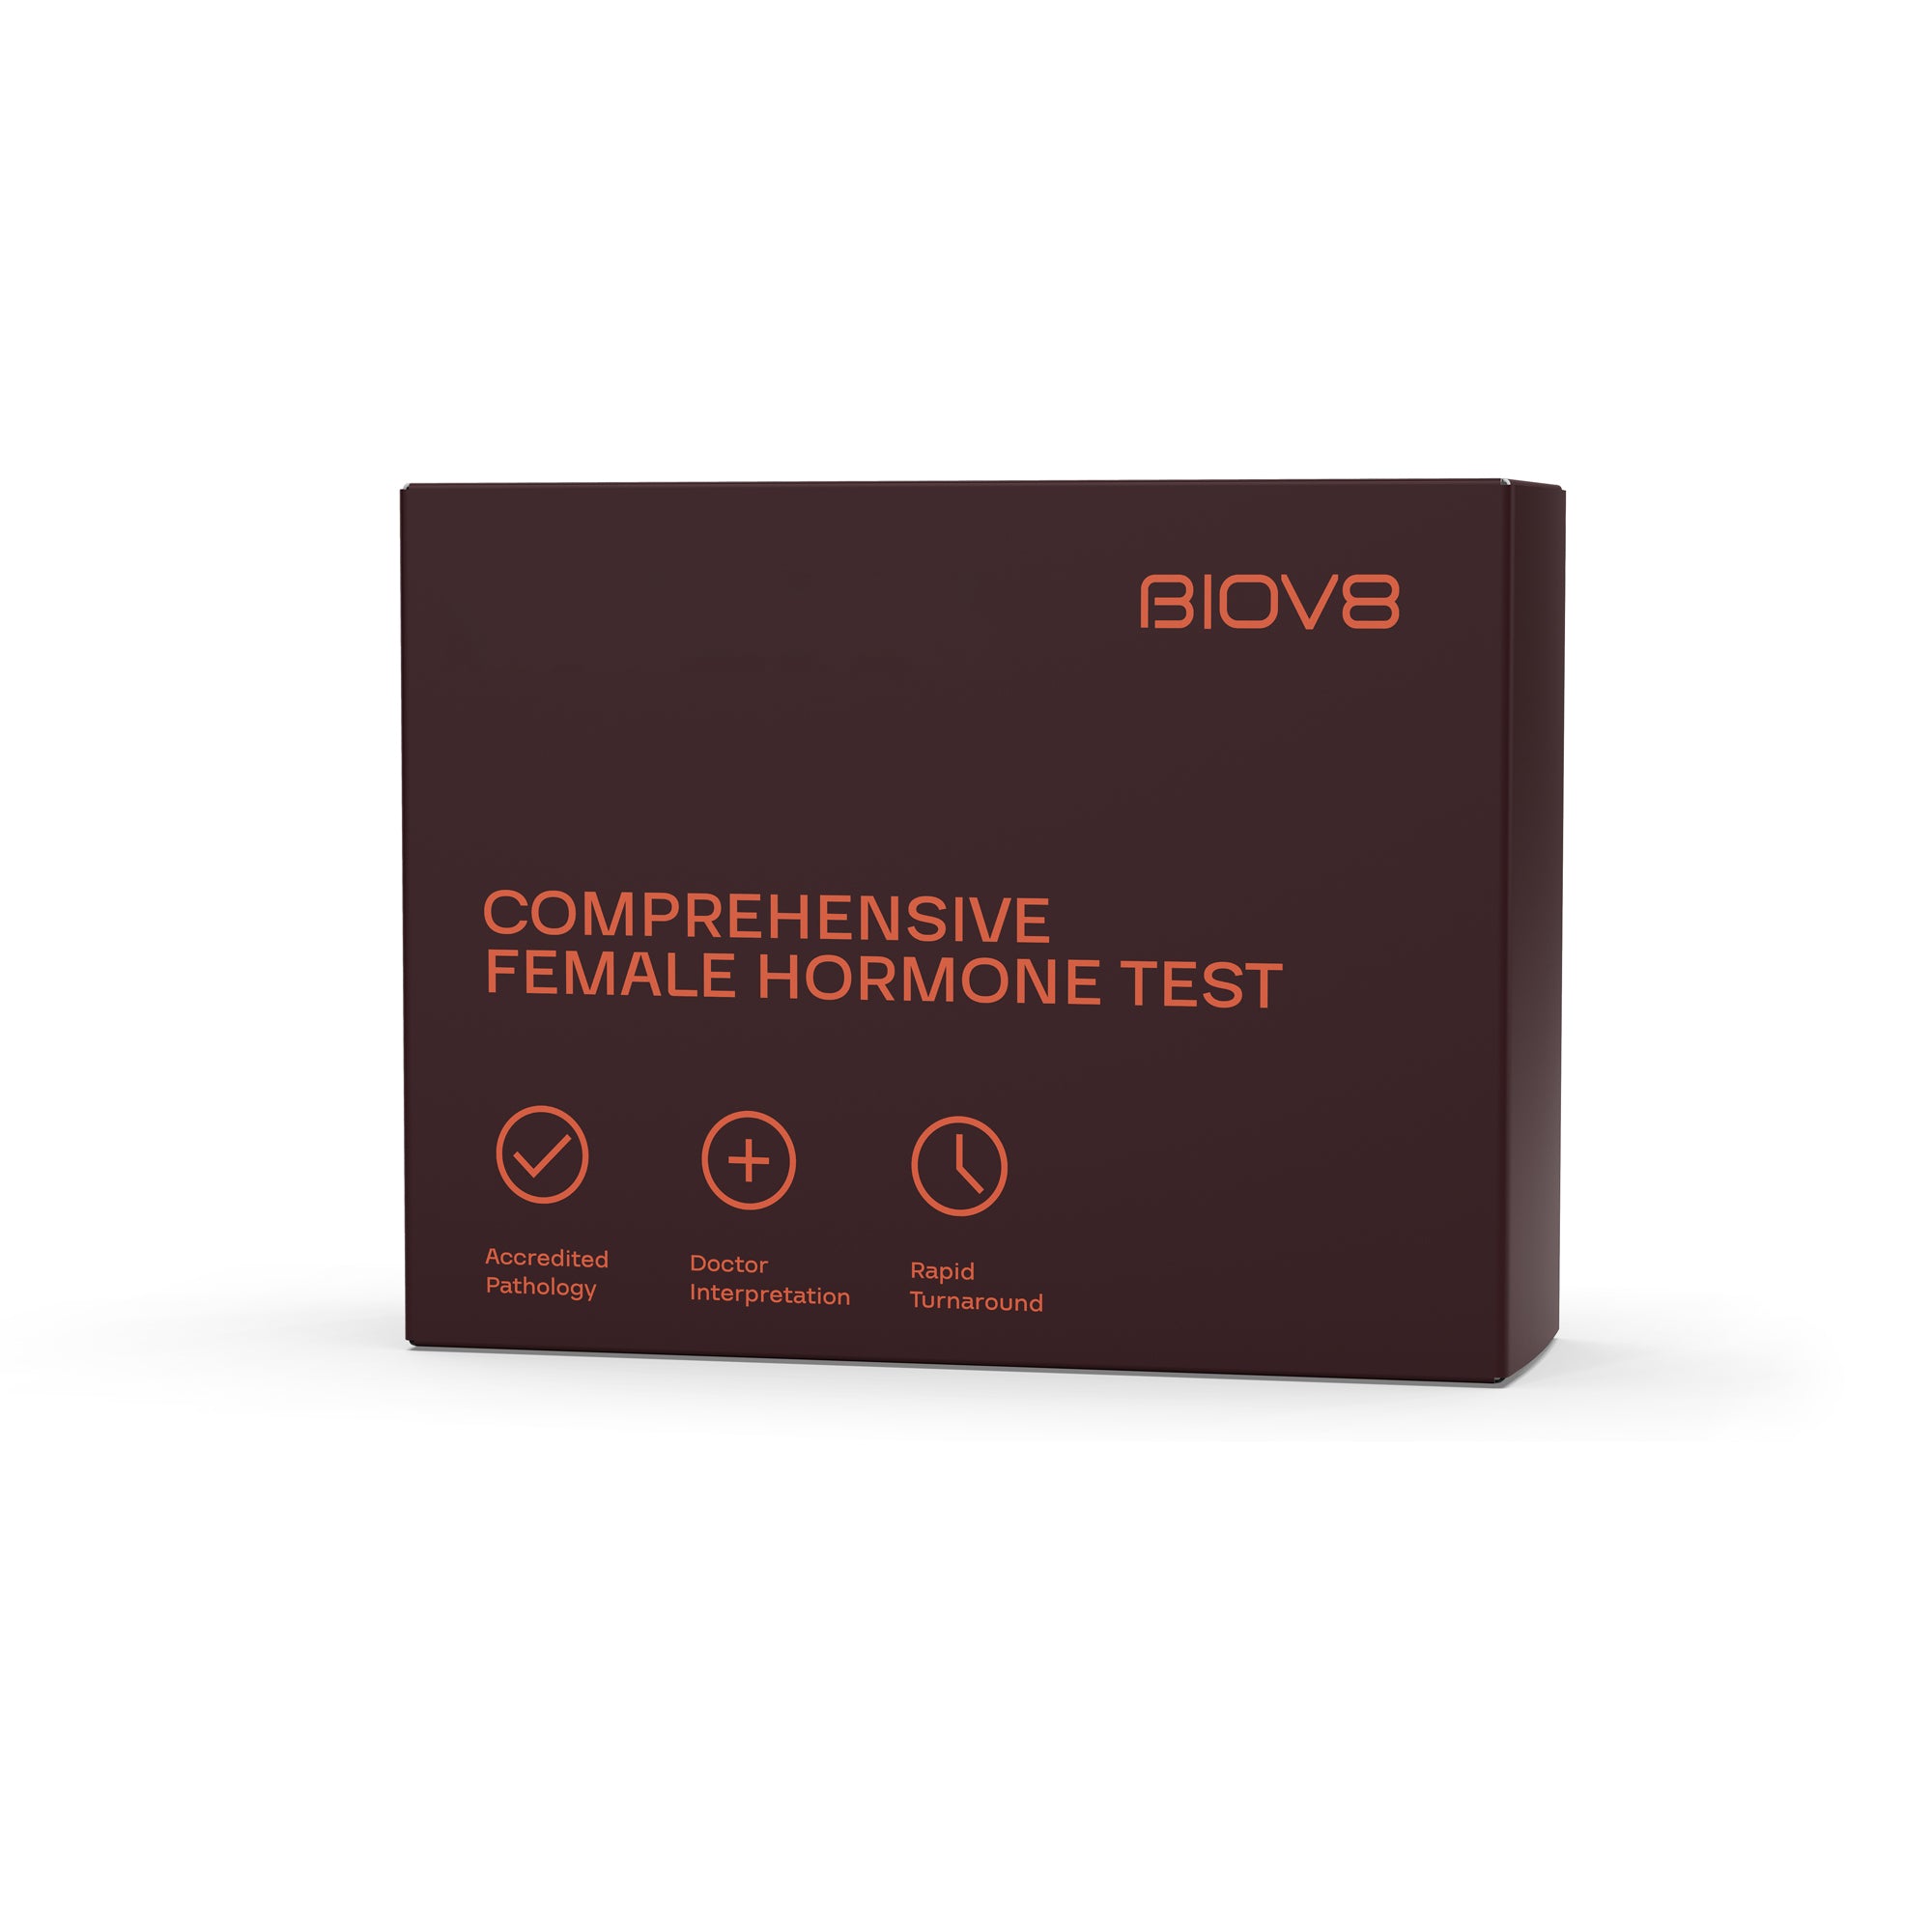 Biov8's Comprehensive Female Hormone Assessment kit